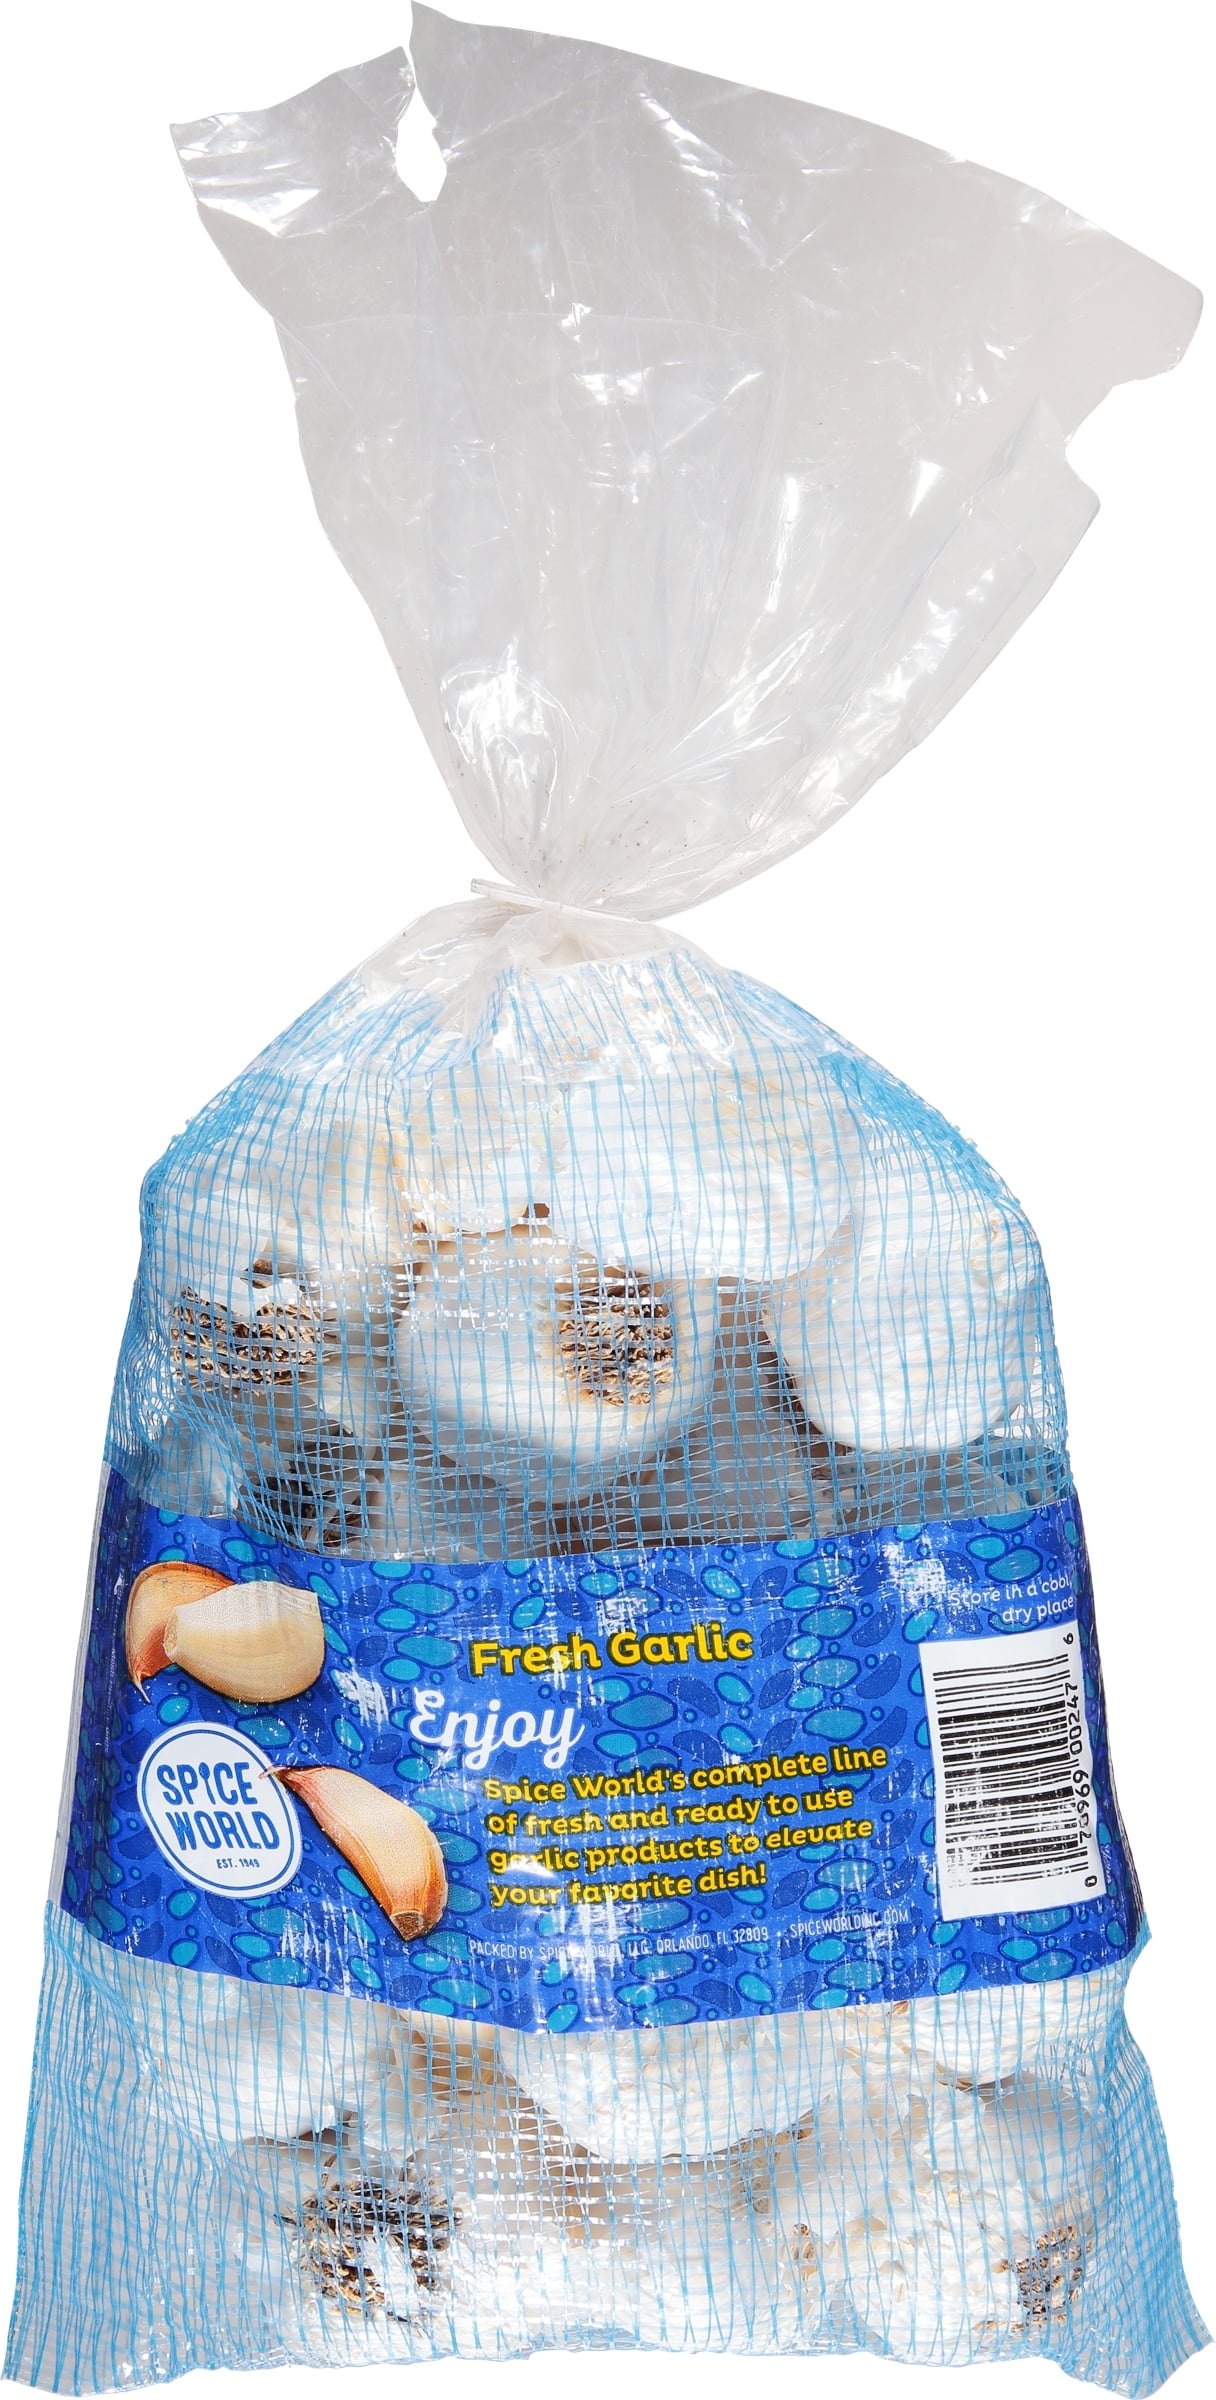 Garlic in Mesh Bag stock image. Image of cloves, aromatic - 10777095